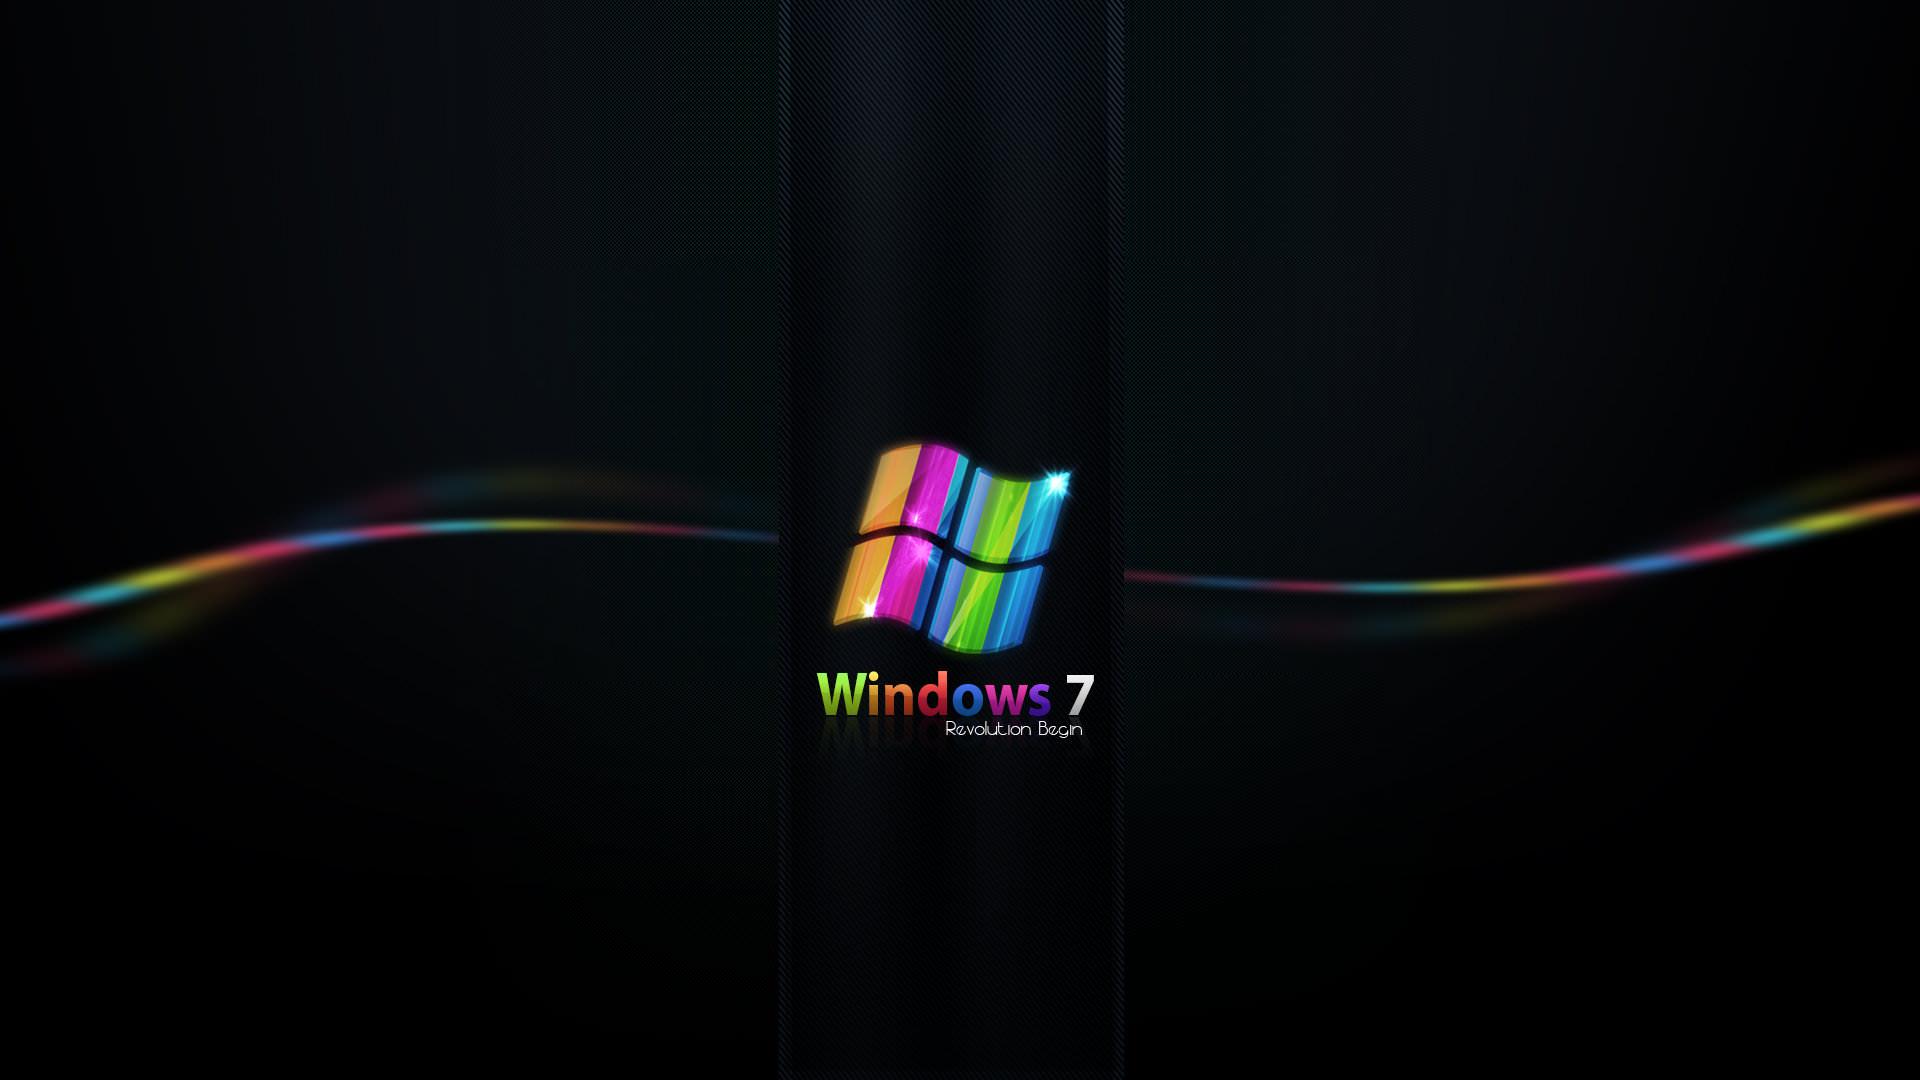 Windows 7 wallpaper 1920x1080 Full HD (1080p) desktop background